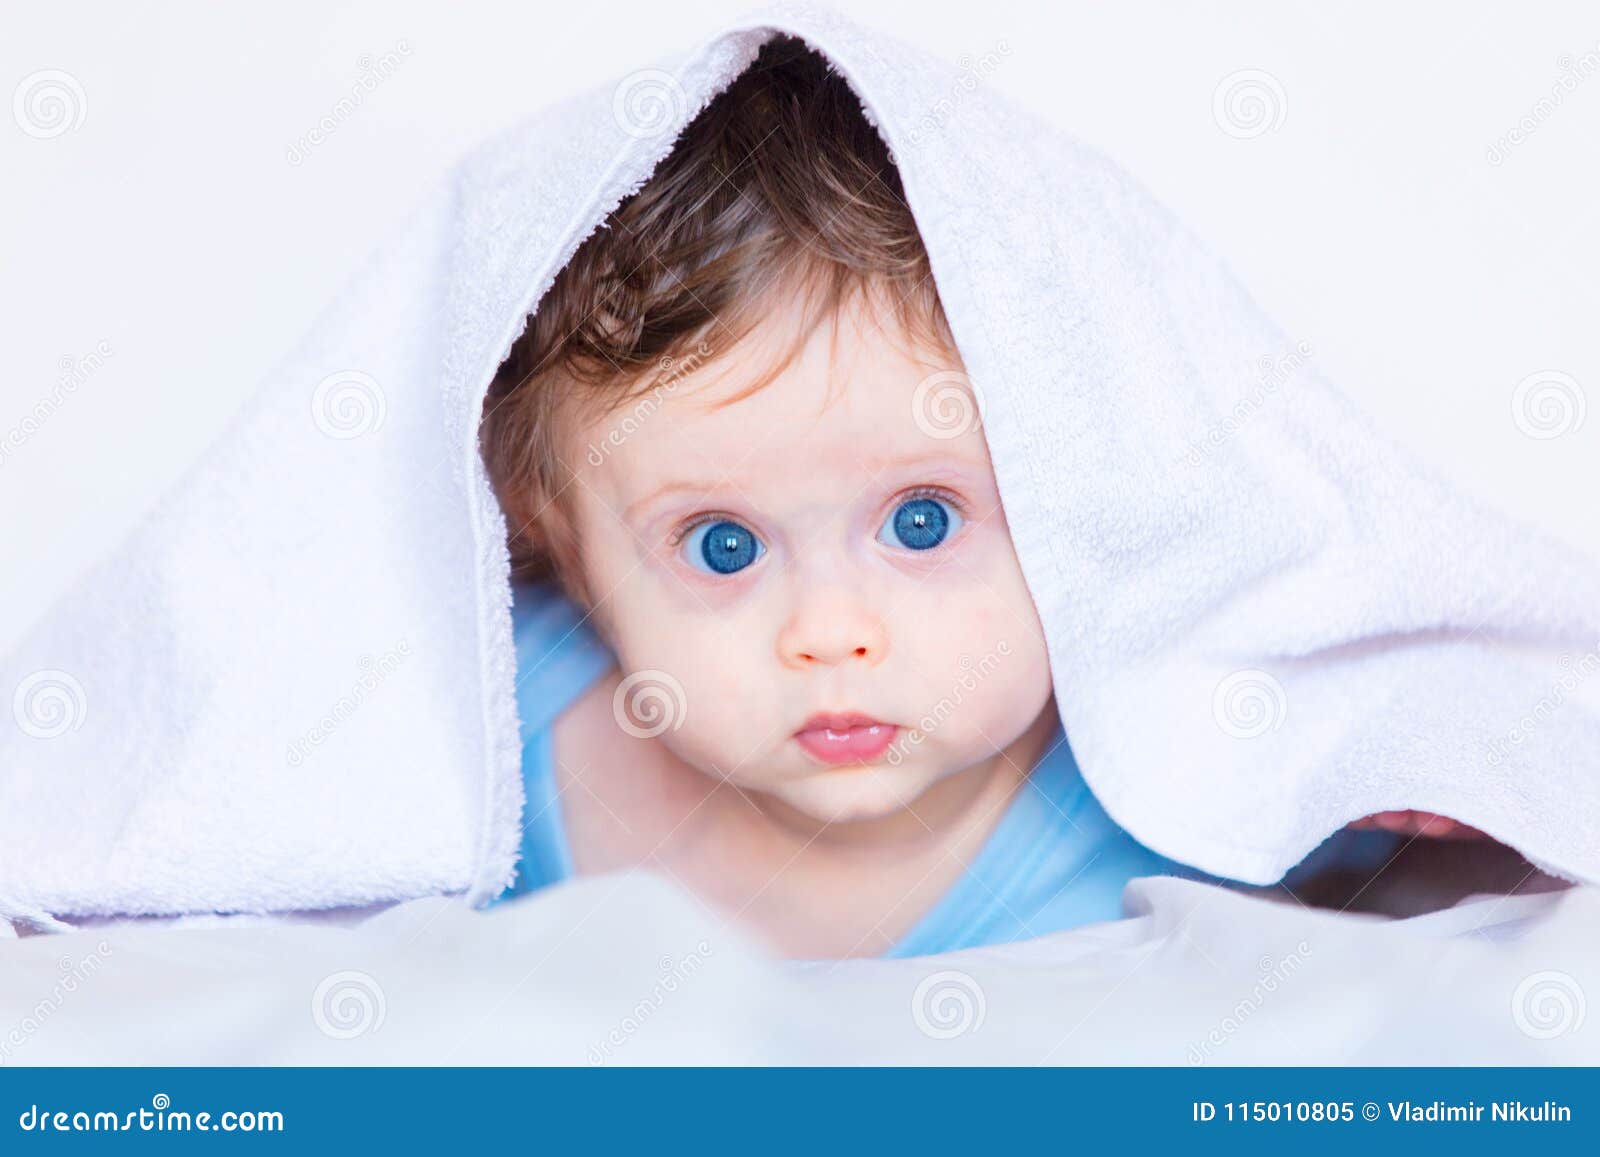 Little Child Boy with Blue Eyes Stock Image - Image of people, eyes:  115010805